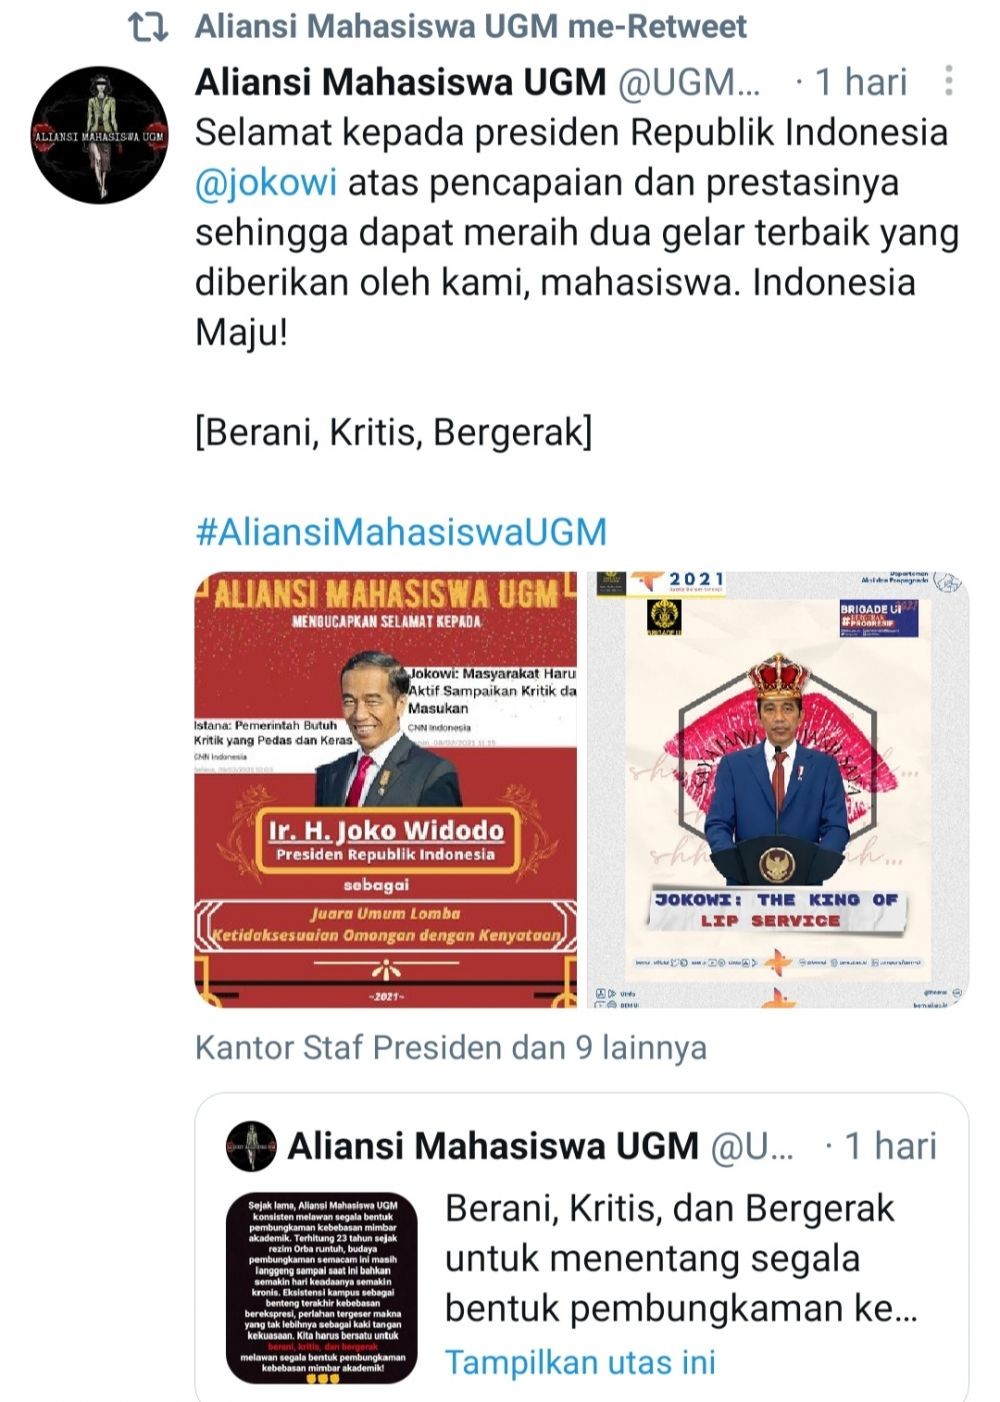 Aliansi Mahasiswa UGM Sindir Jokowi Juara Ketidaksesuaian Omongan